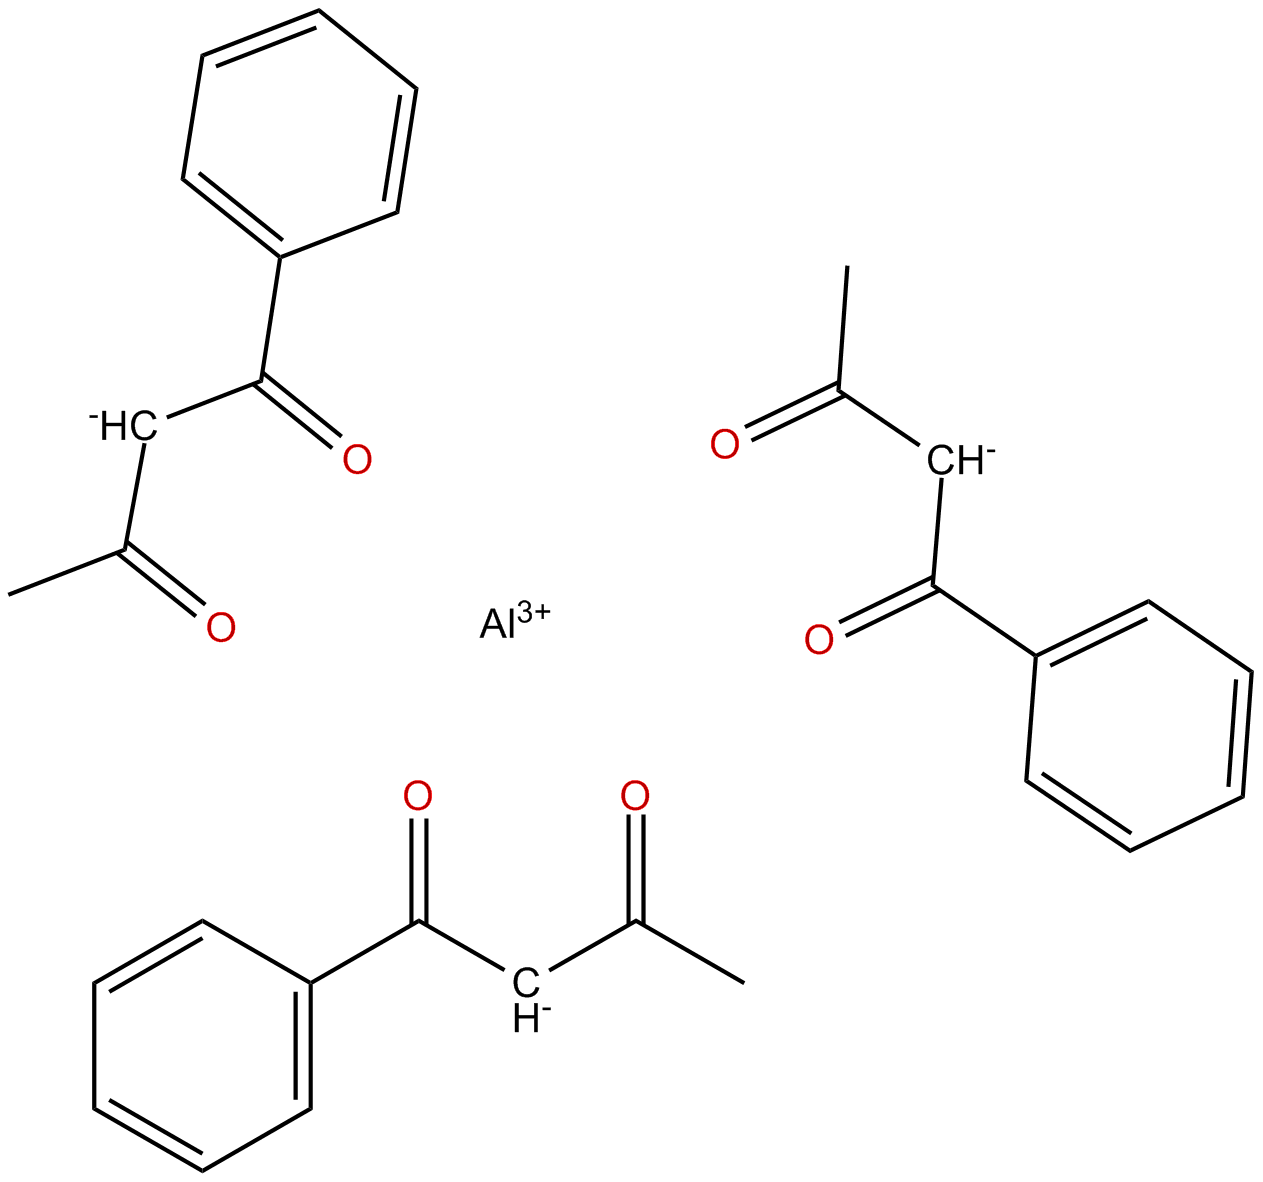 Image of tris(benzoylacetonato)aluminum